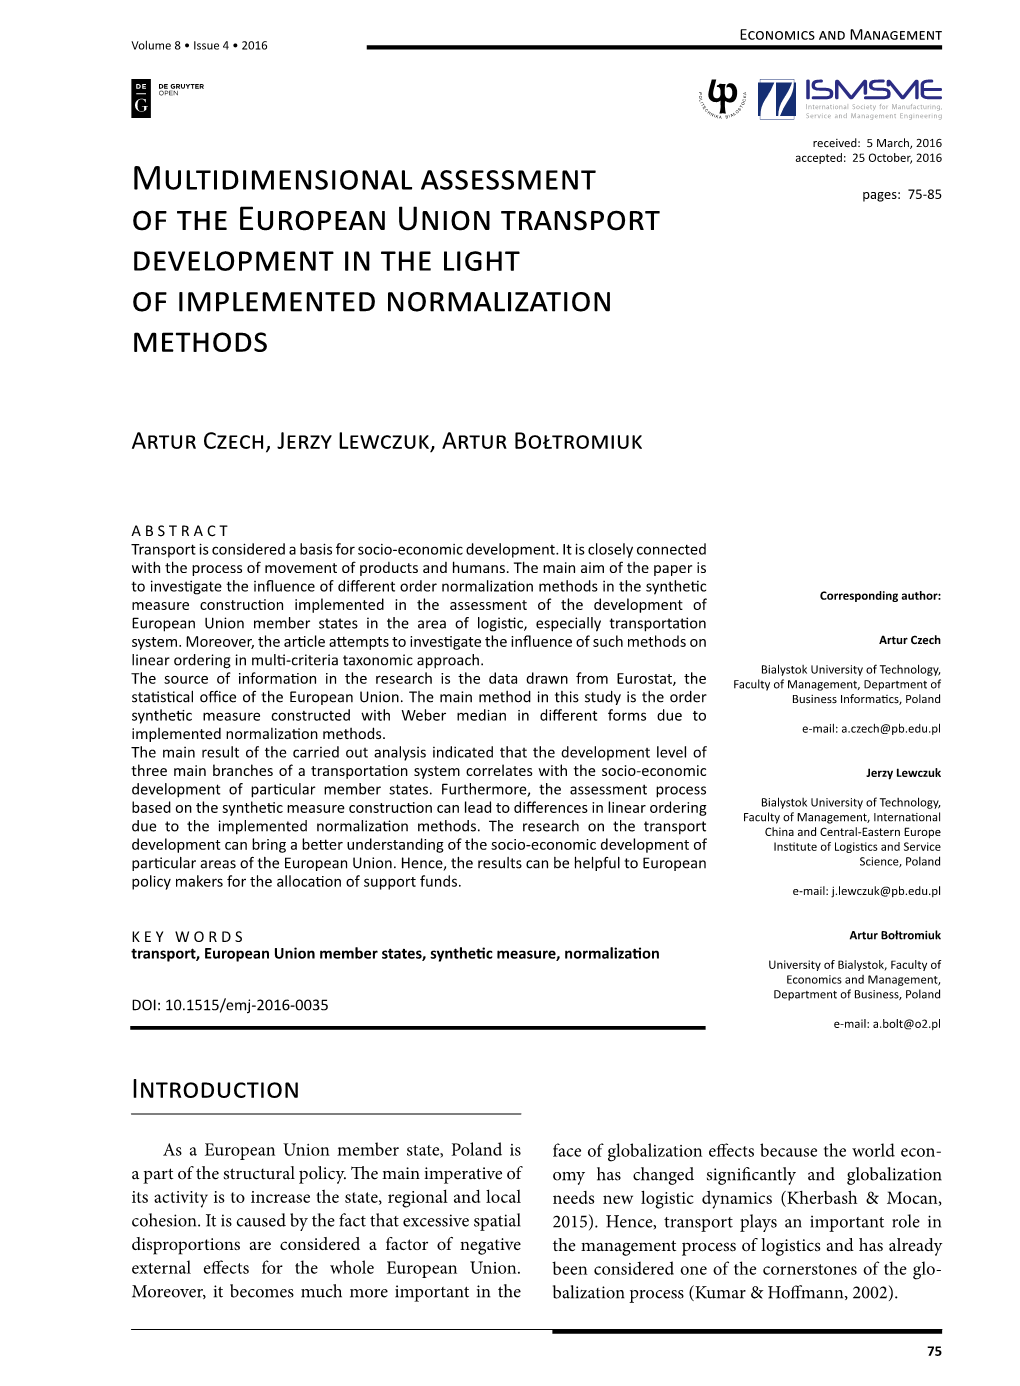 Multidimensional Assessment of the European Union Transport